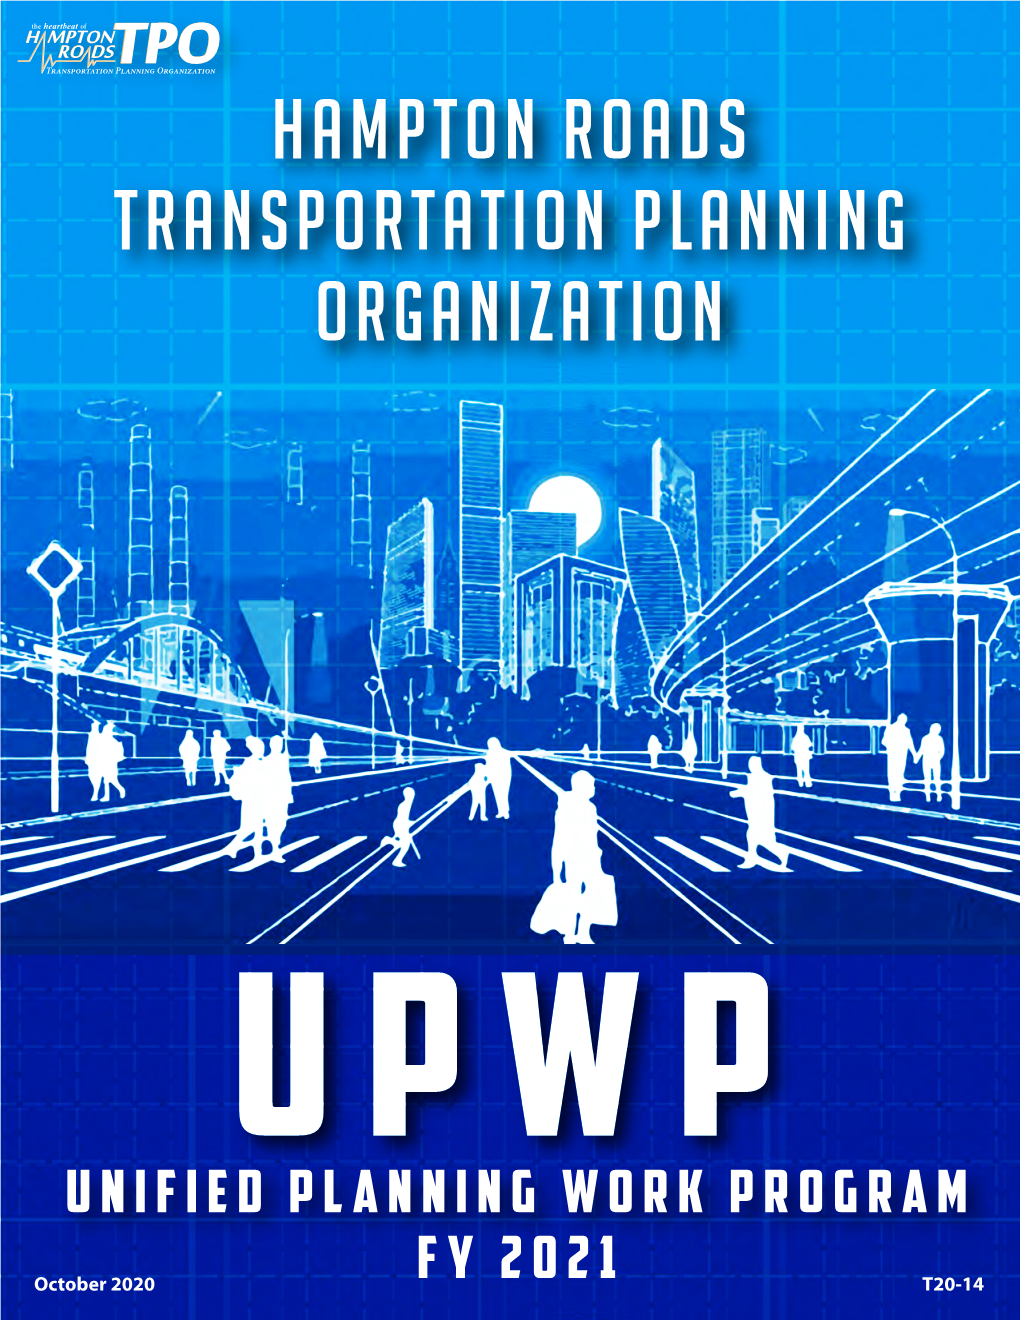 UPWP Unified Planning Work Program